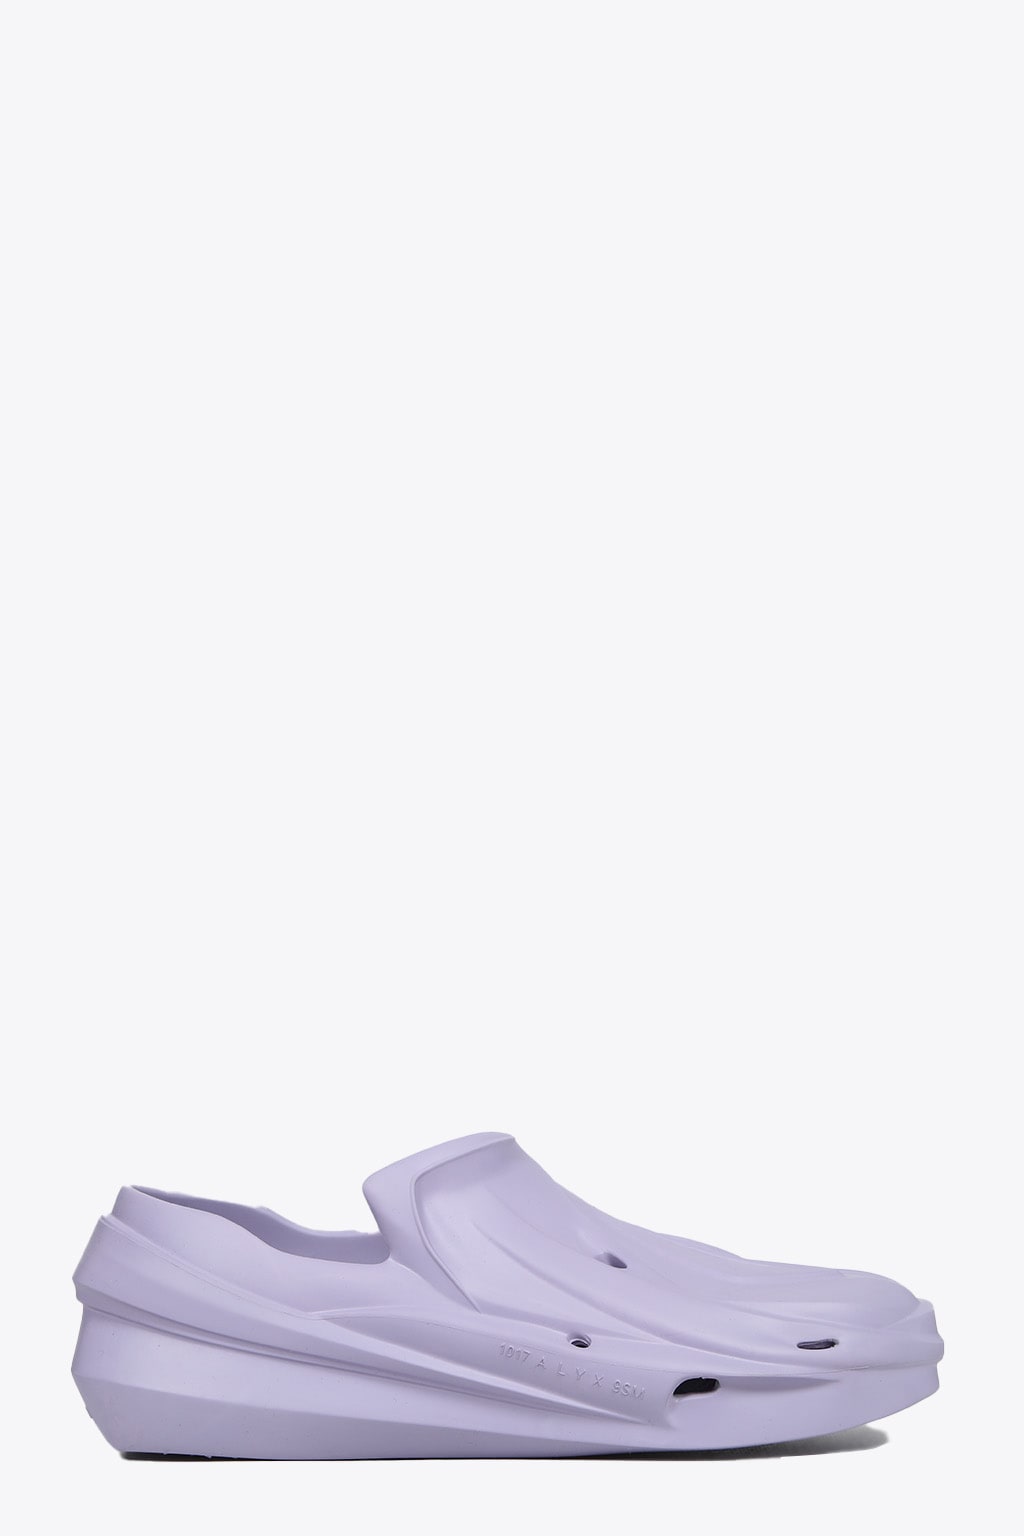 1017 ALYX 9SM Sneakers Mono Slip On Lilac 3D rubber slip on sneaker - Mono Slip On